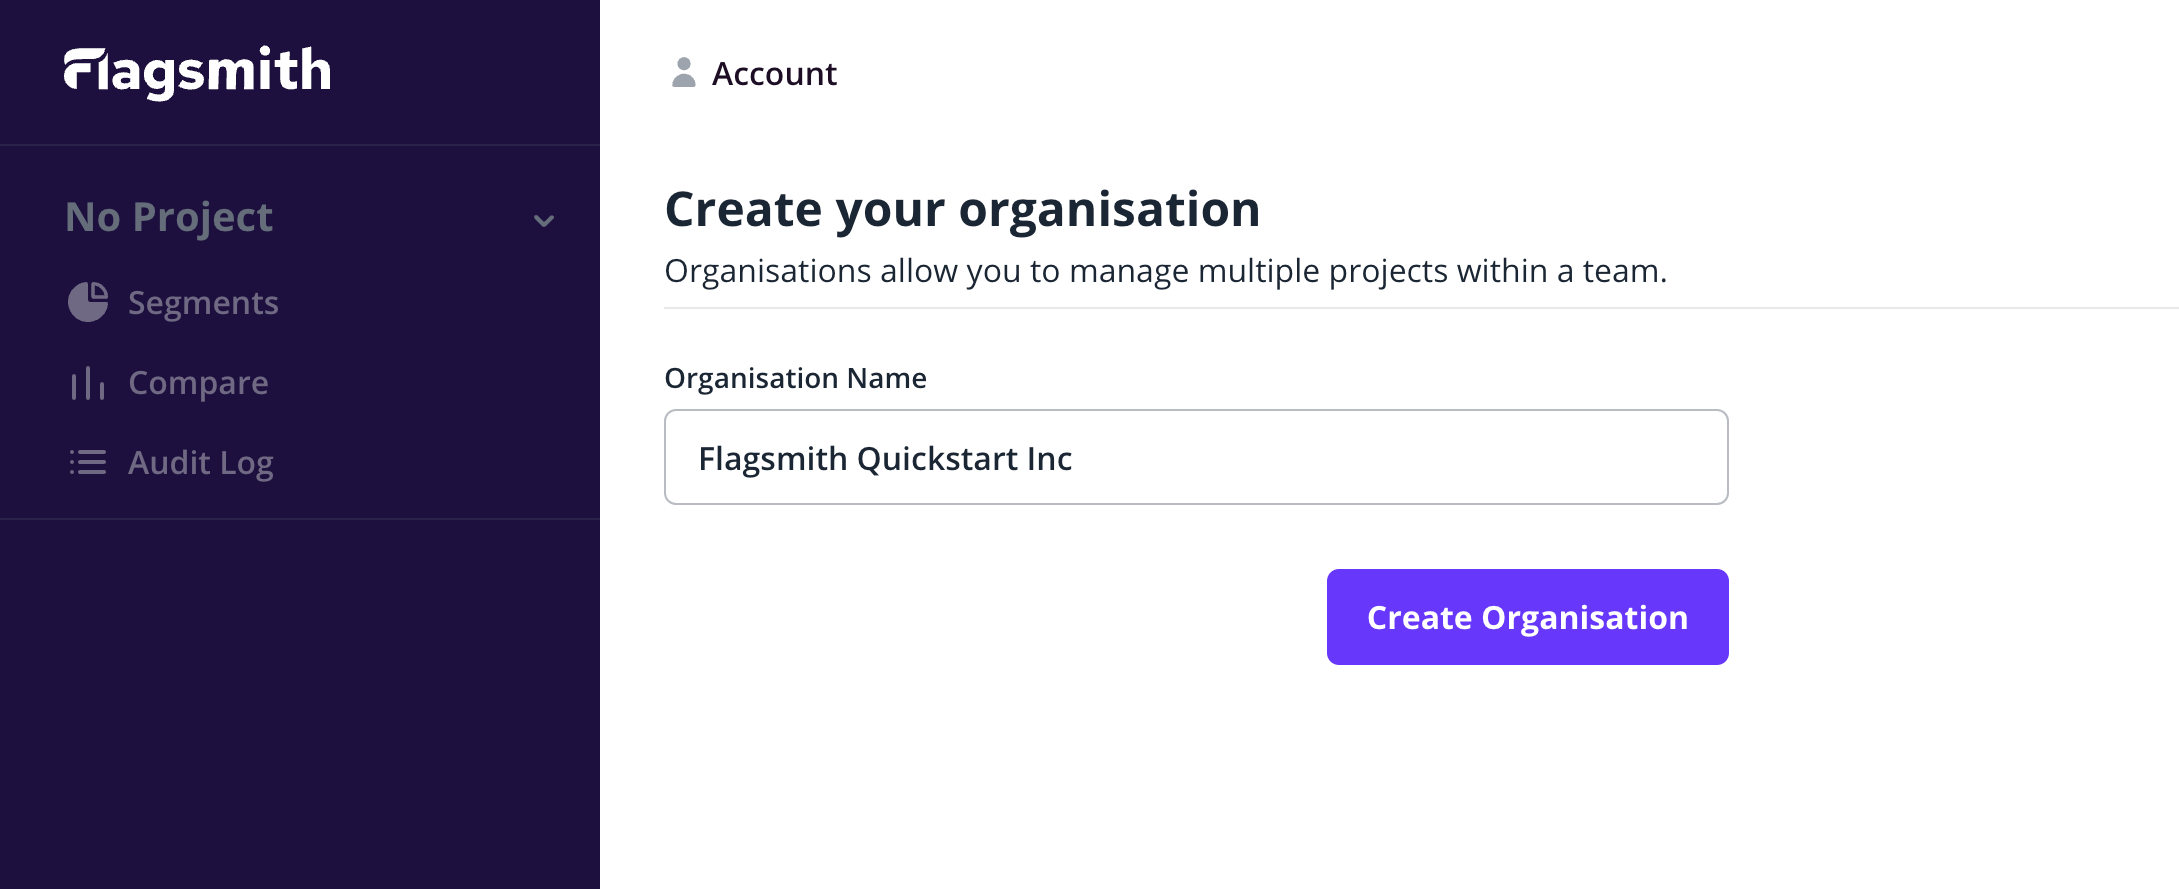 Create Organisation